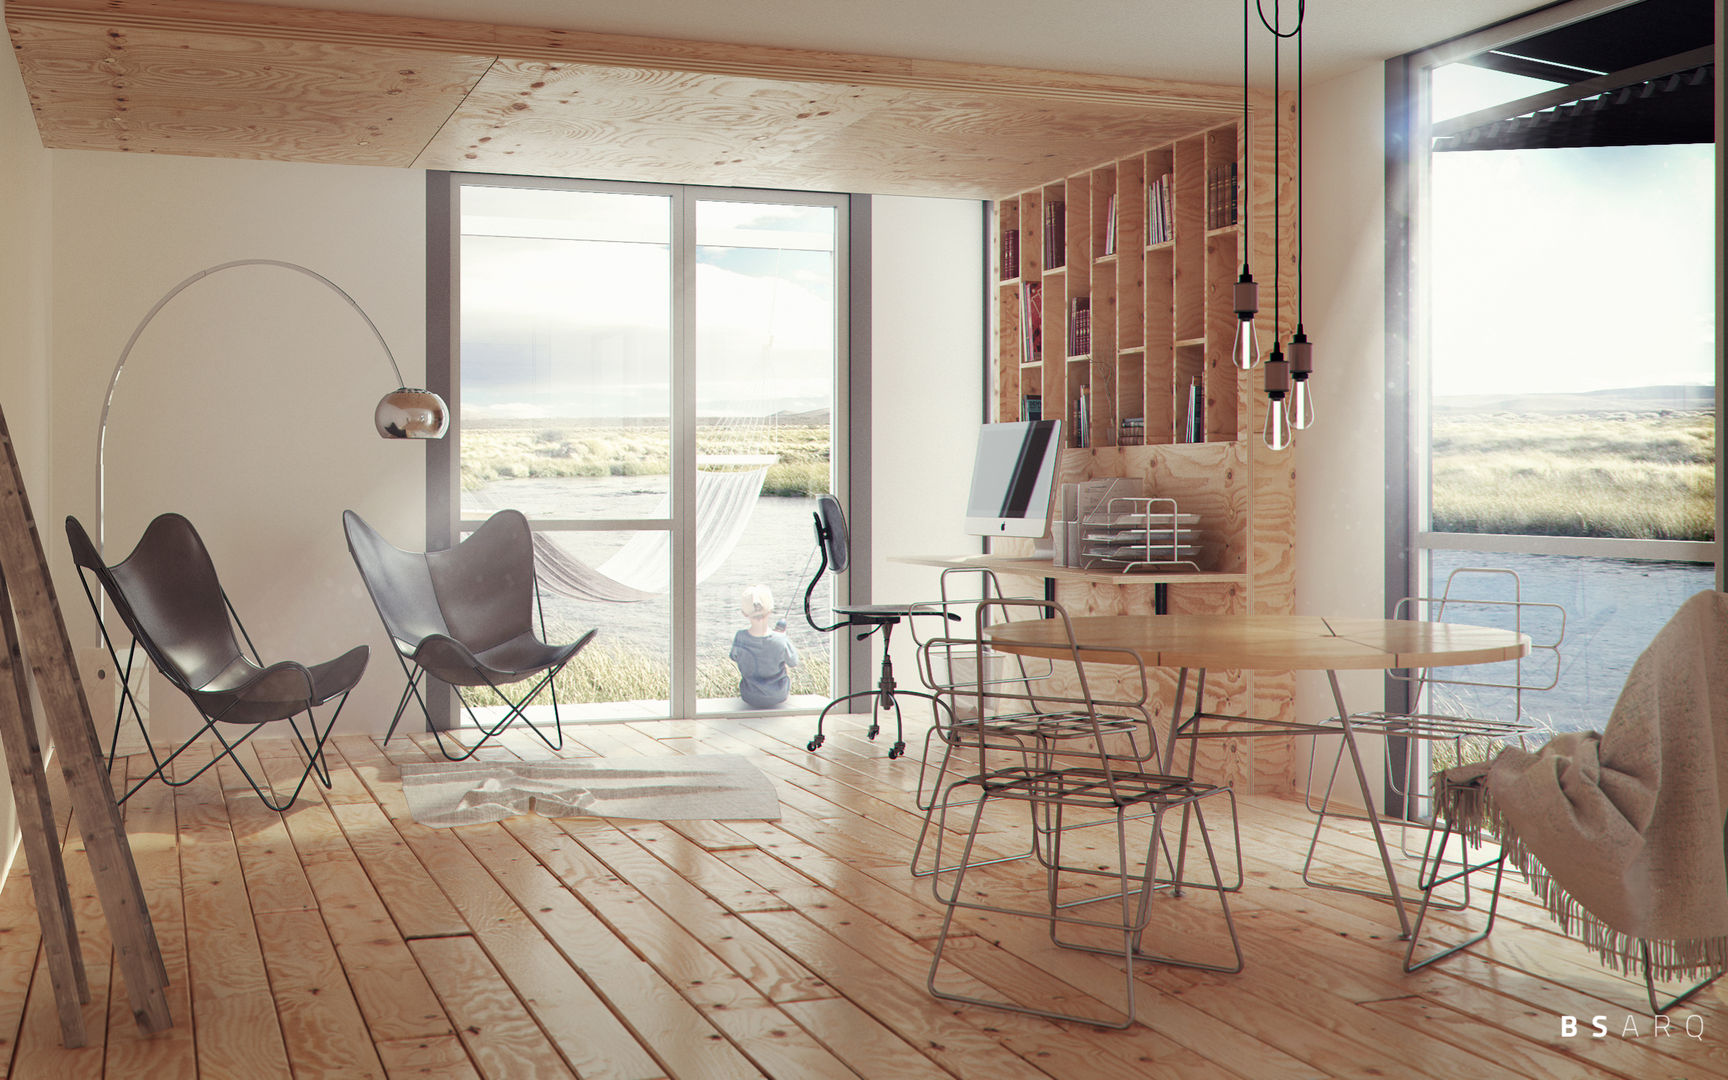 Viviendas Prefabricadas, BS ARQ BS ARQ Salas de estilo minimalista Madera Acabado en madera